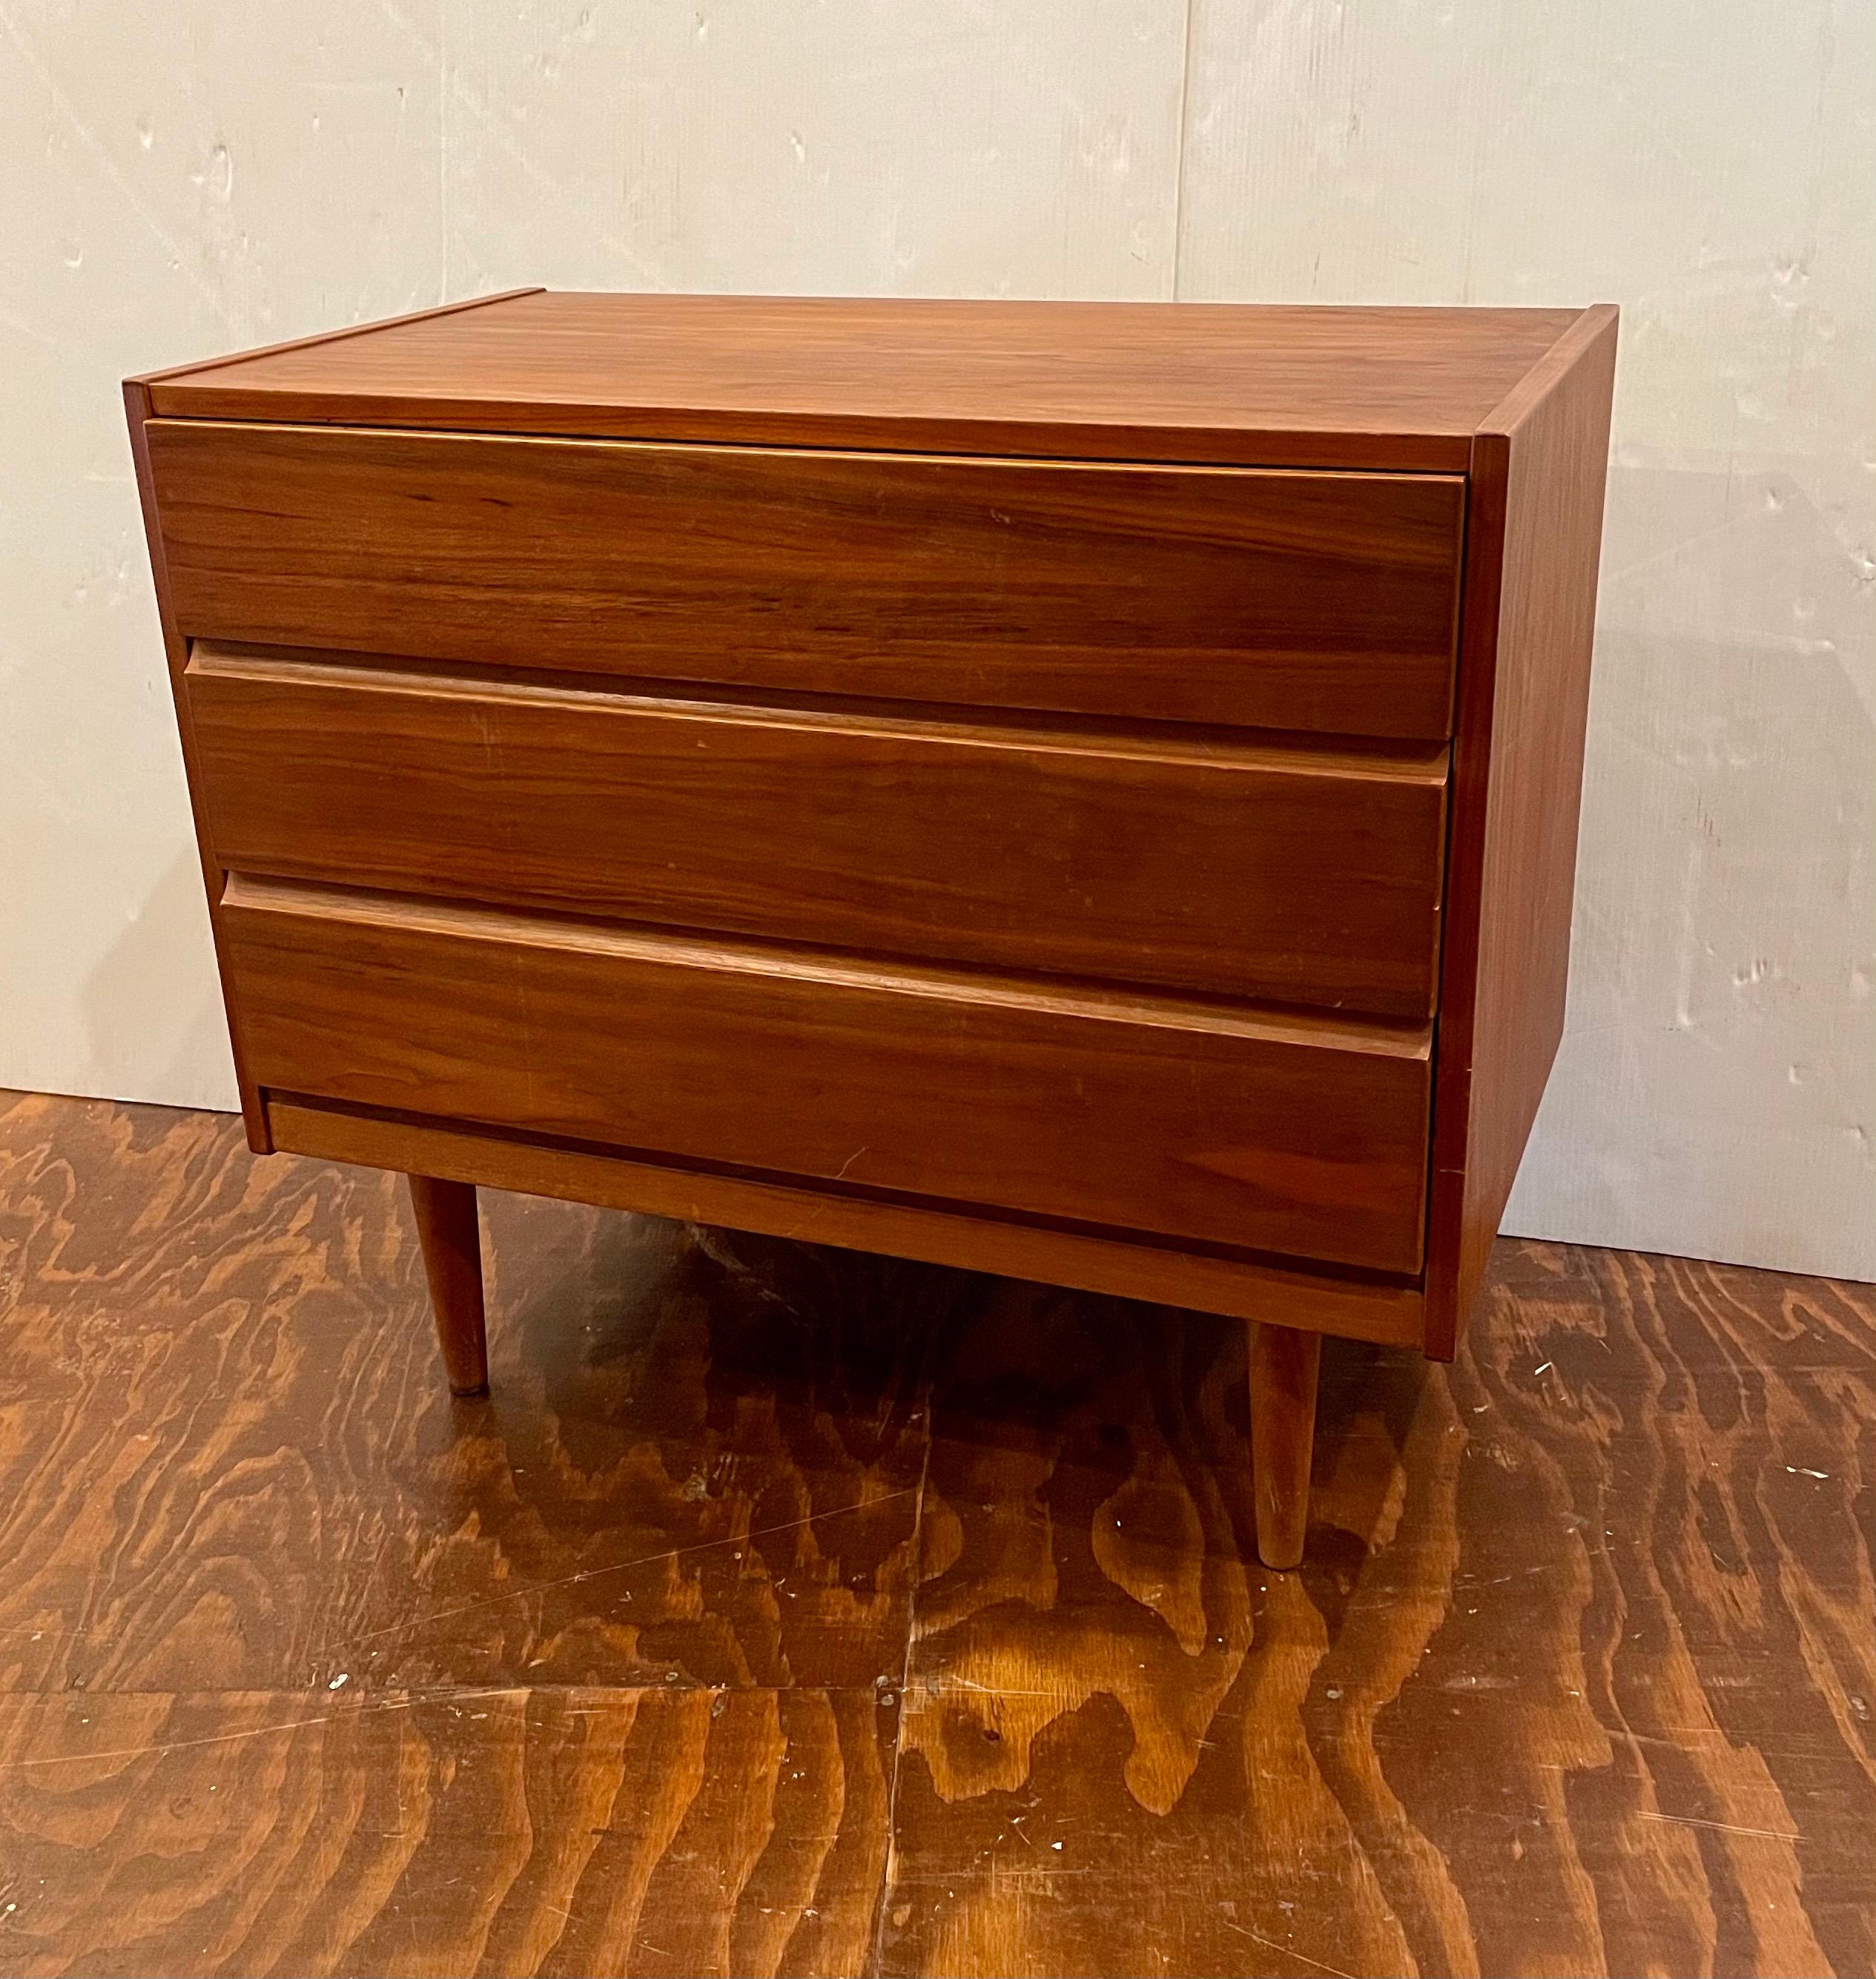 Beautiful simple elegant 3 drawer dresser in beautiful walnut grain finish, circa 1960's great quality simple design.